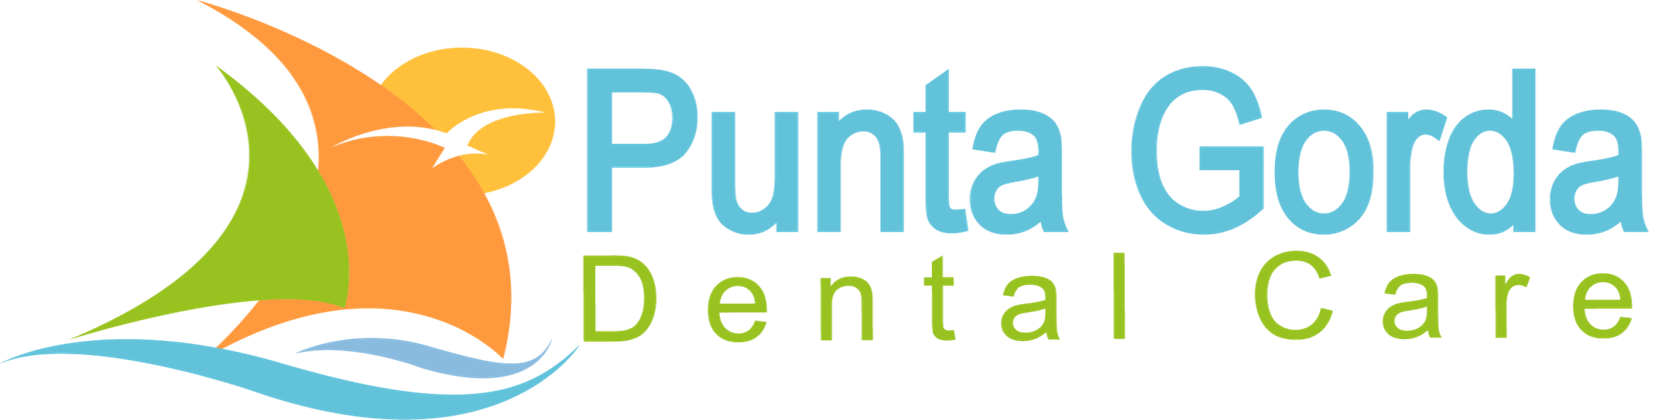 Punta Gorda Dental Care transparent logo